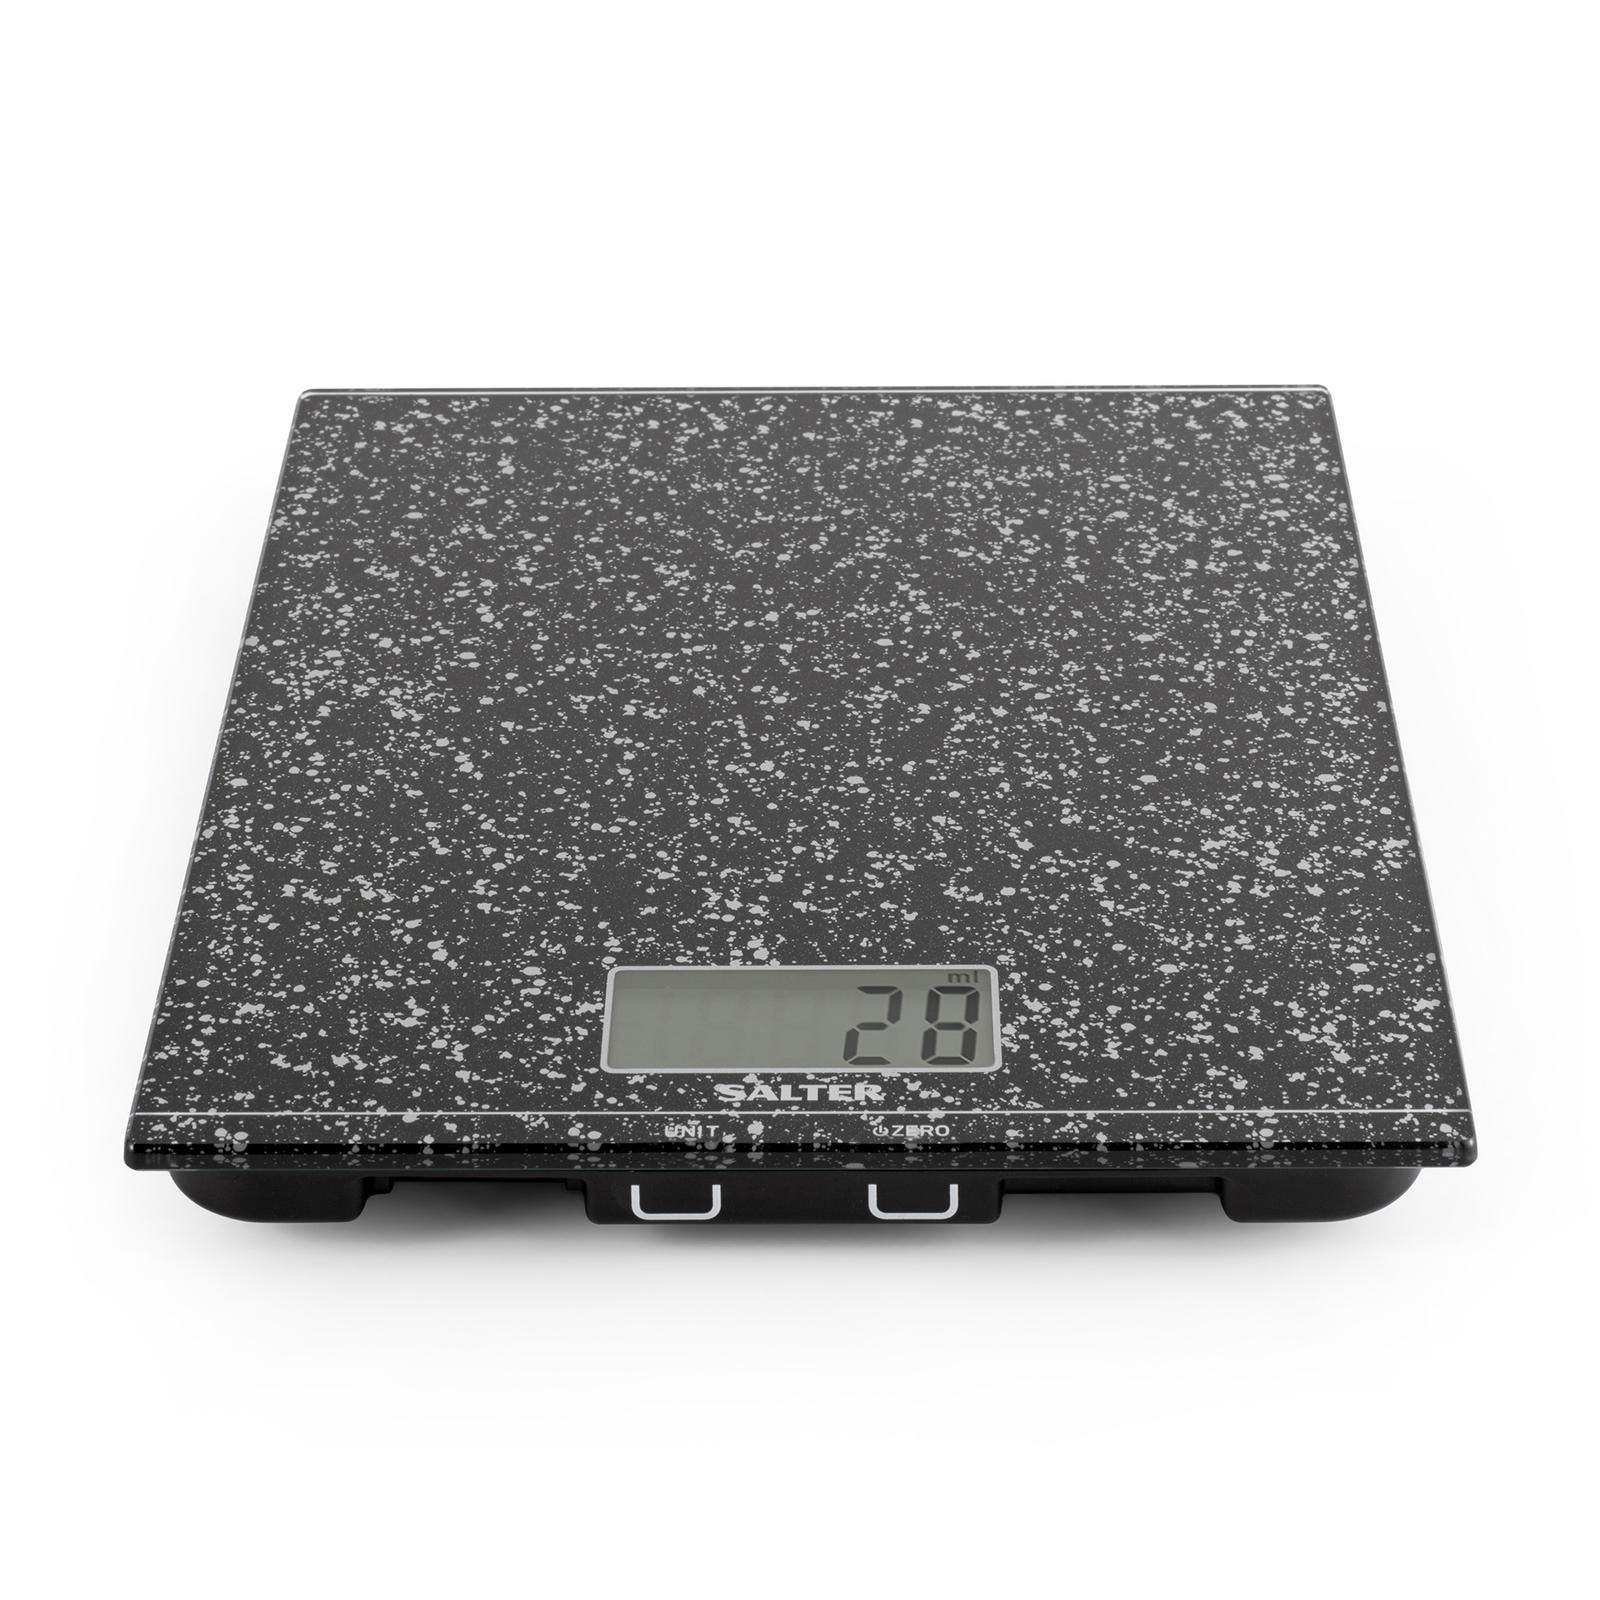 Salter Glitter Electronic Kitchen Tare/Zero Digital Glass Weight Scale 5kg Black